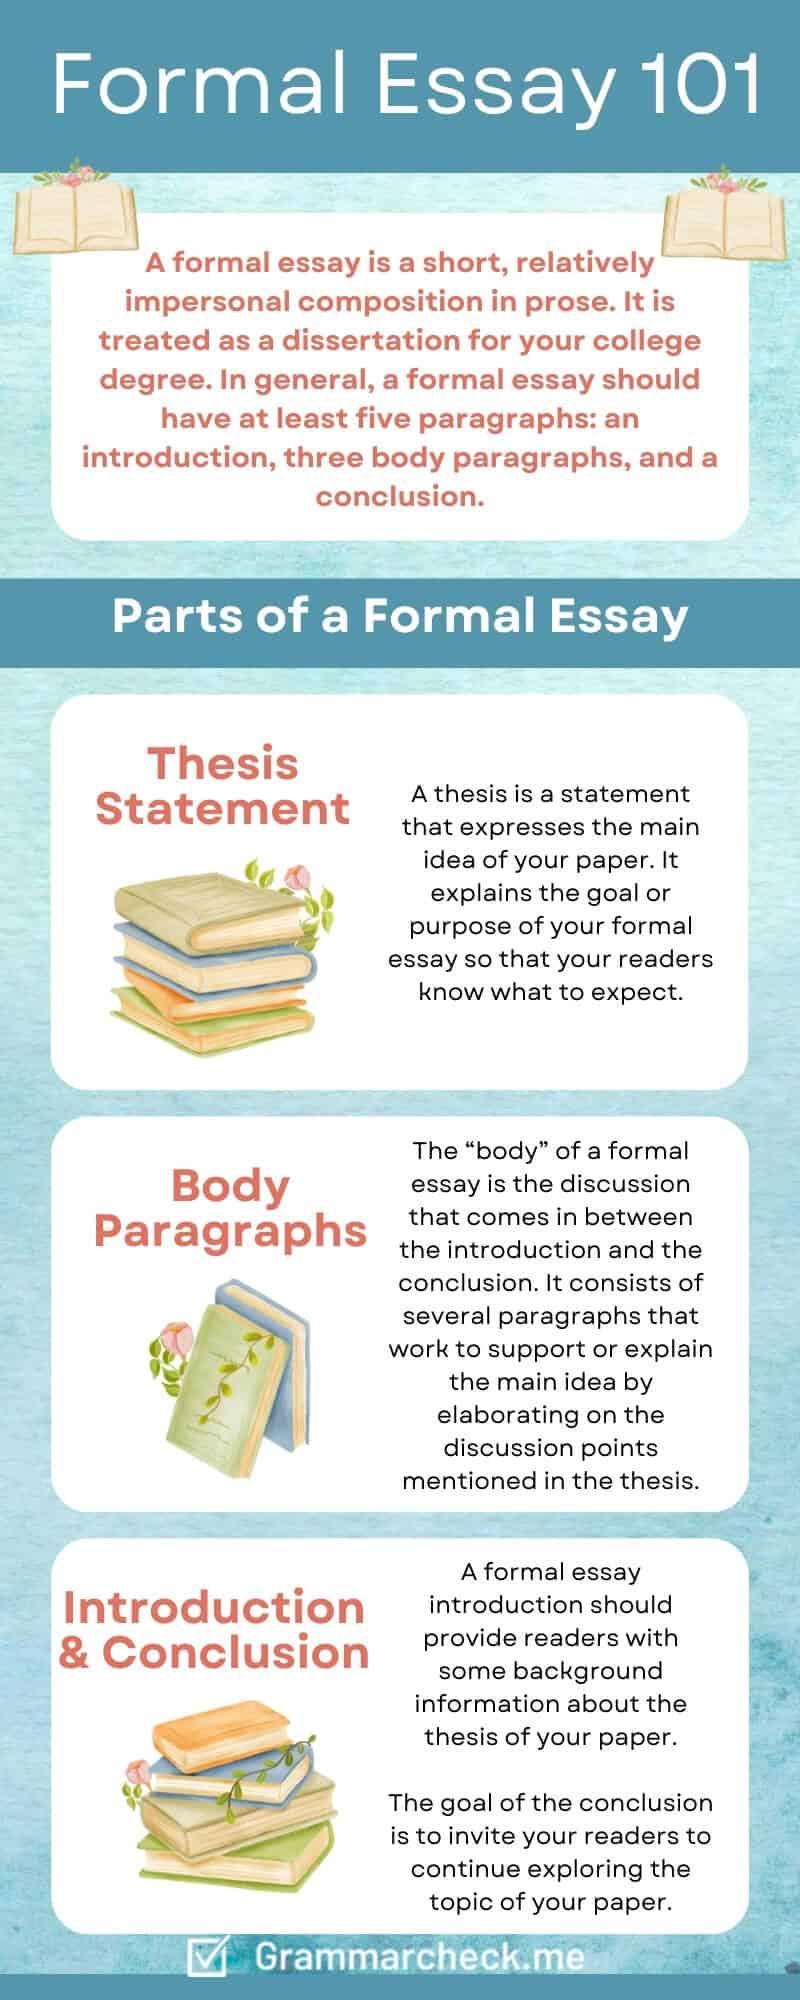 formal essay writing rules